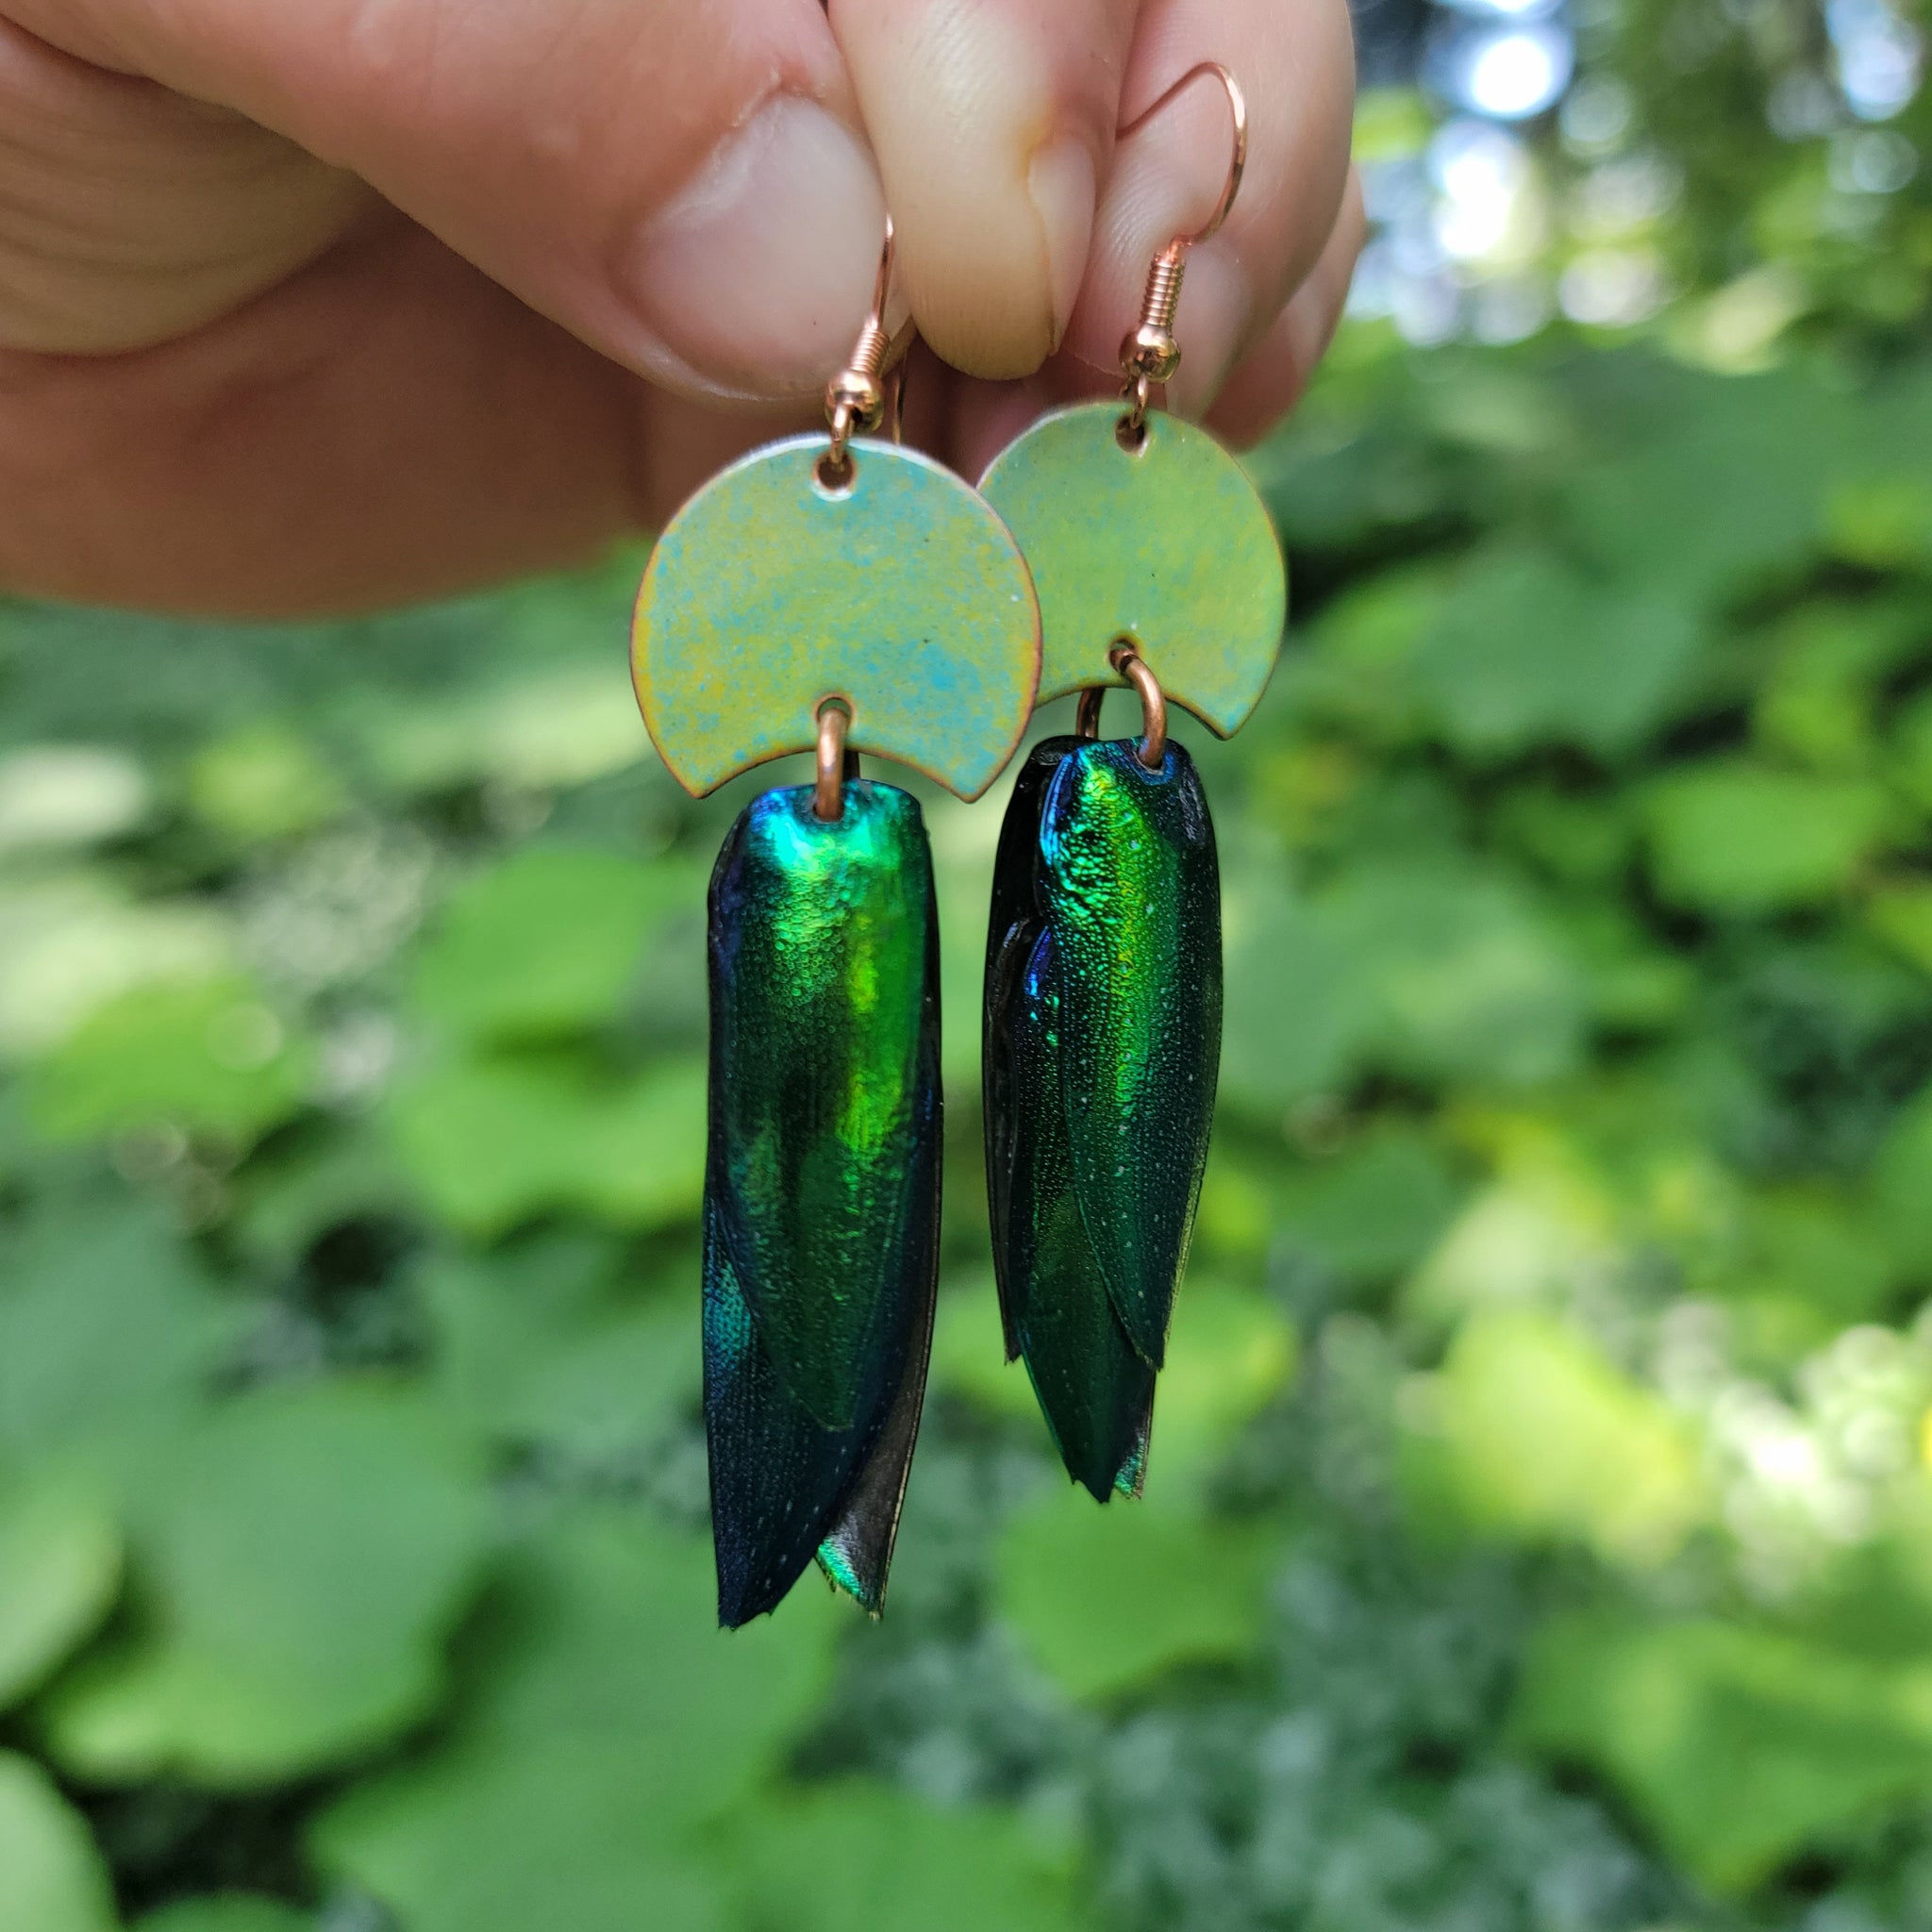 Beetle Queen Enameled Copper Earrings with Jewel Beetle Wings